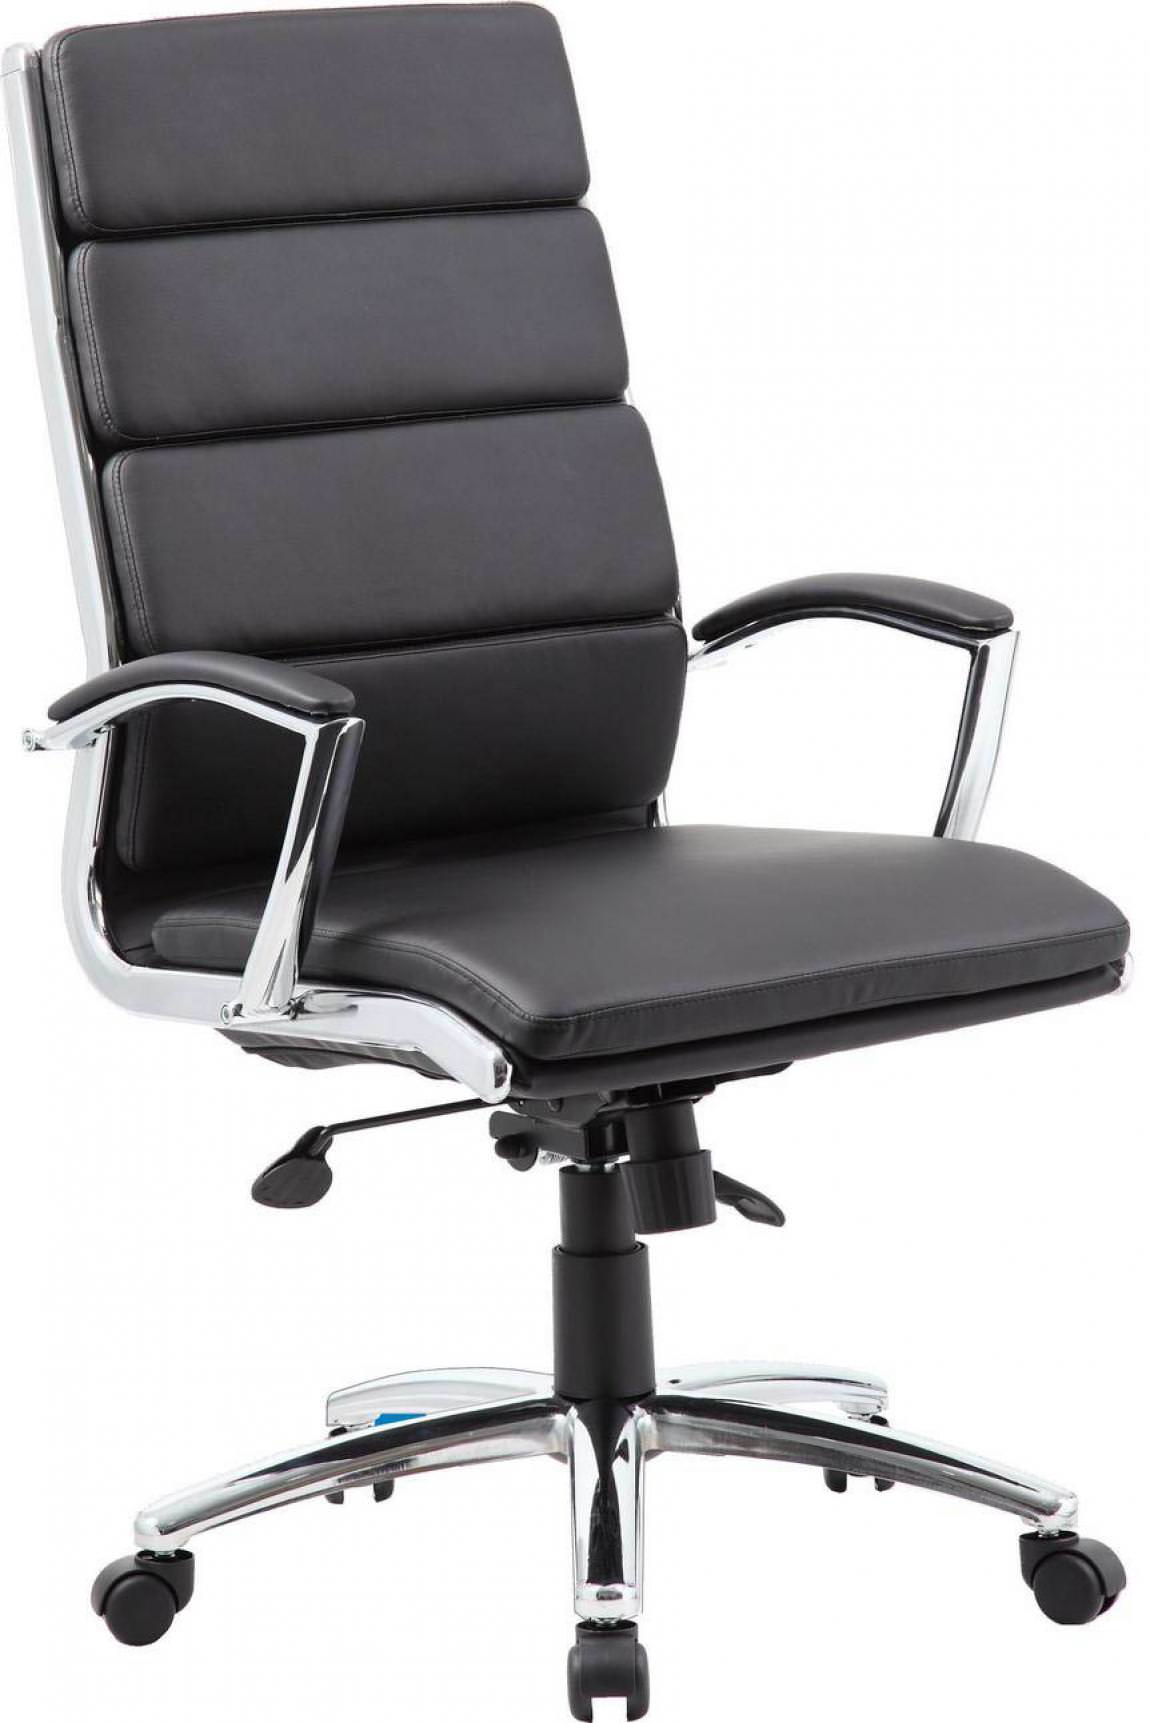 Stylish and Ultra Comfortable Executive Chair | Madison Liquidators